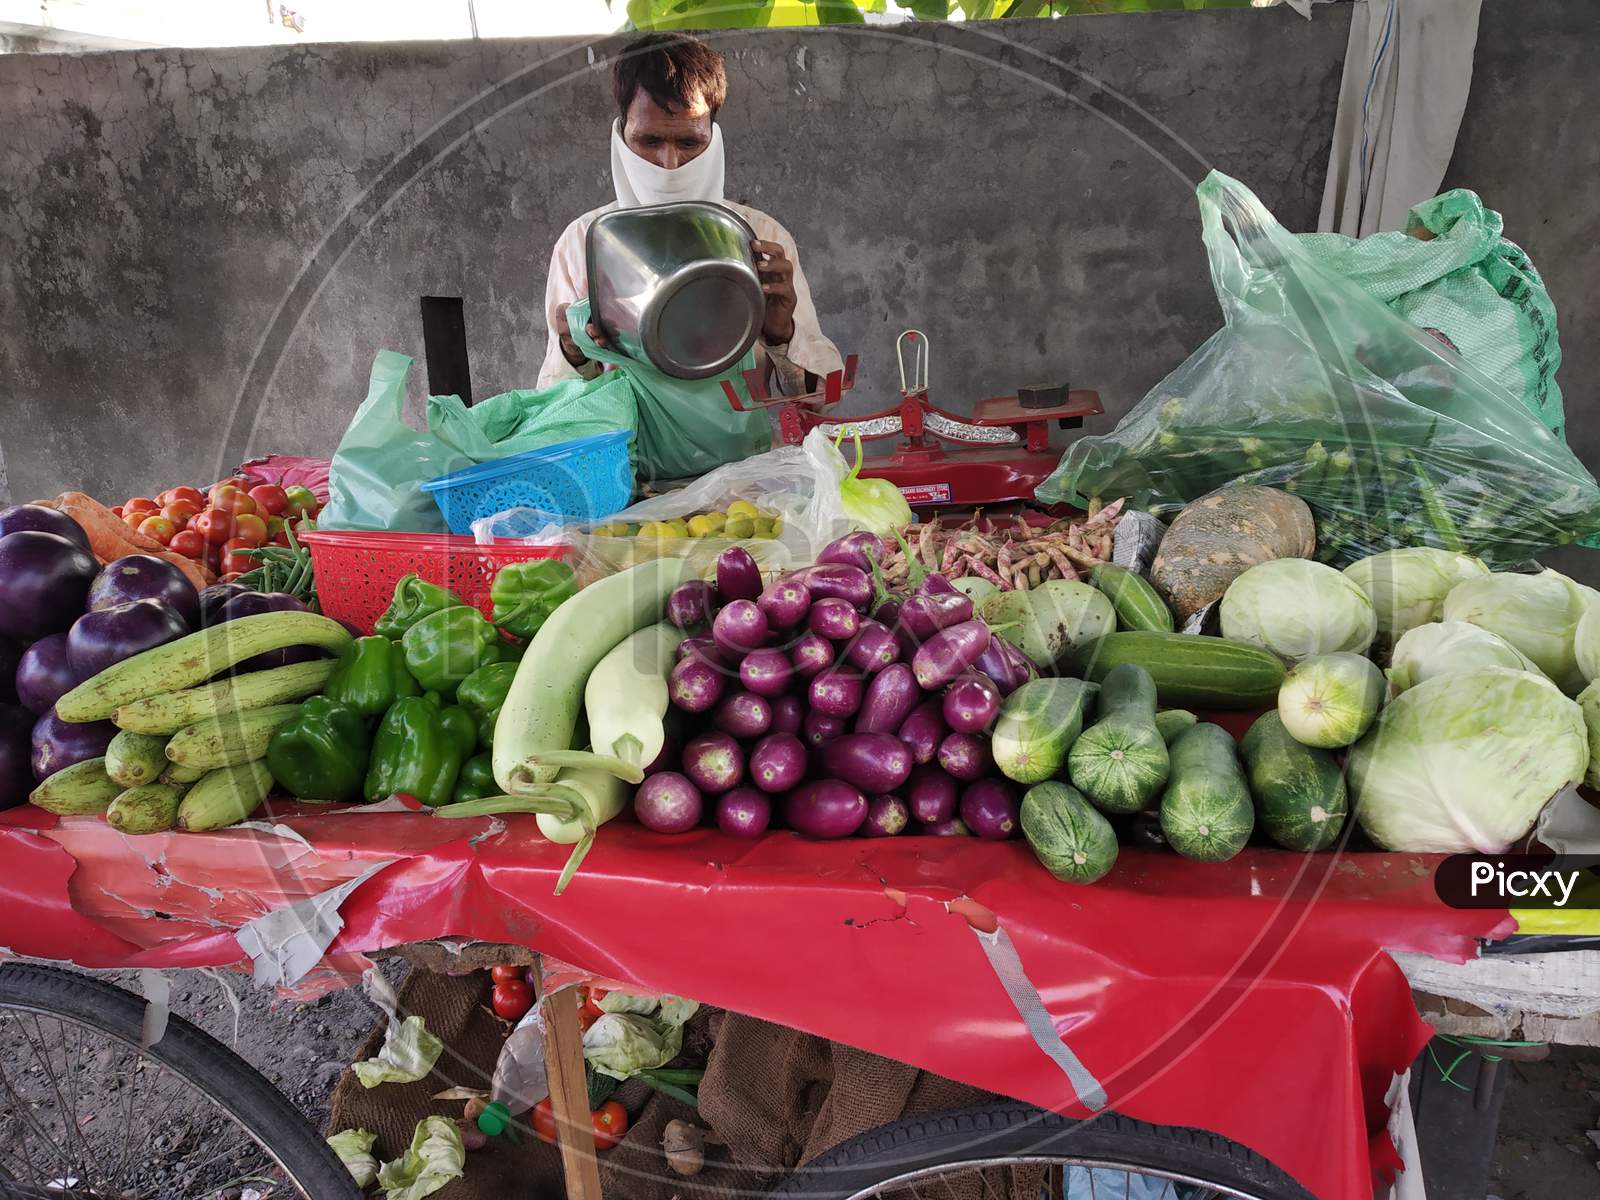 vegetable vendor selling vegetables on his vegetable cart